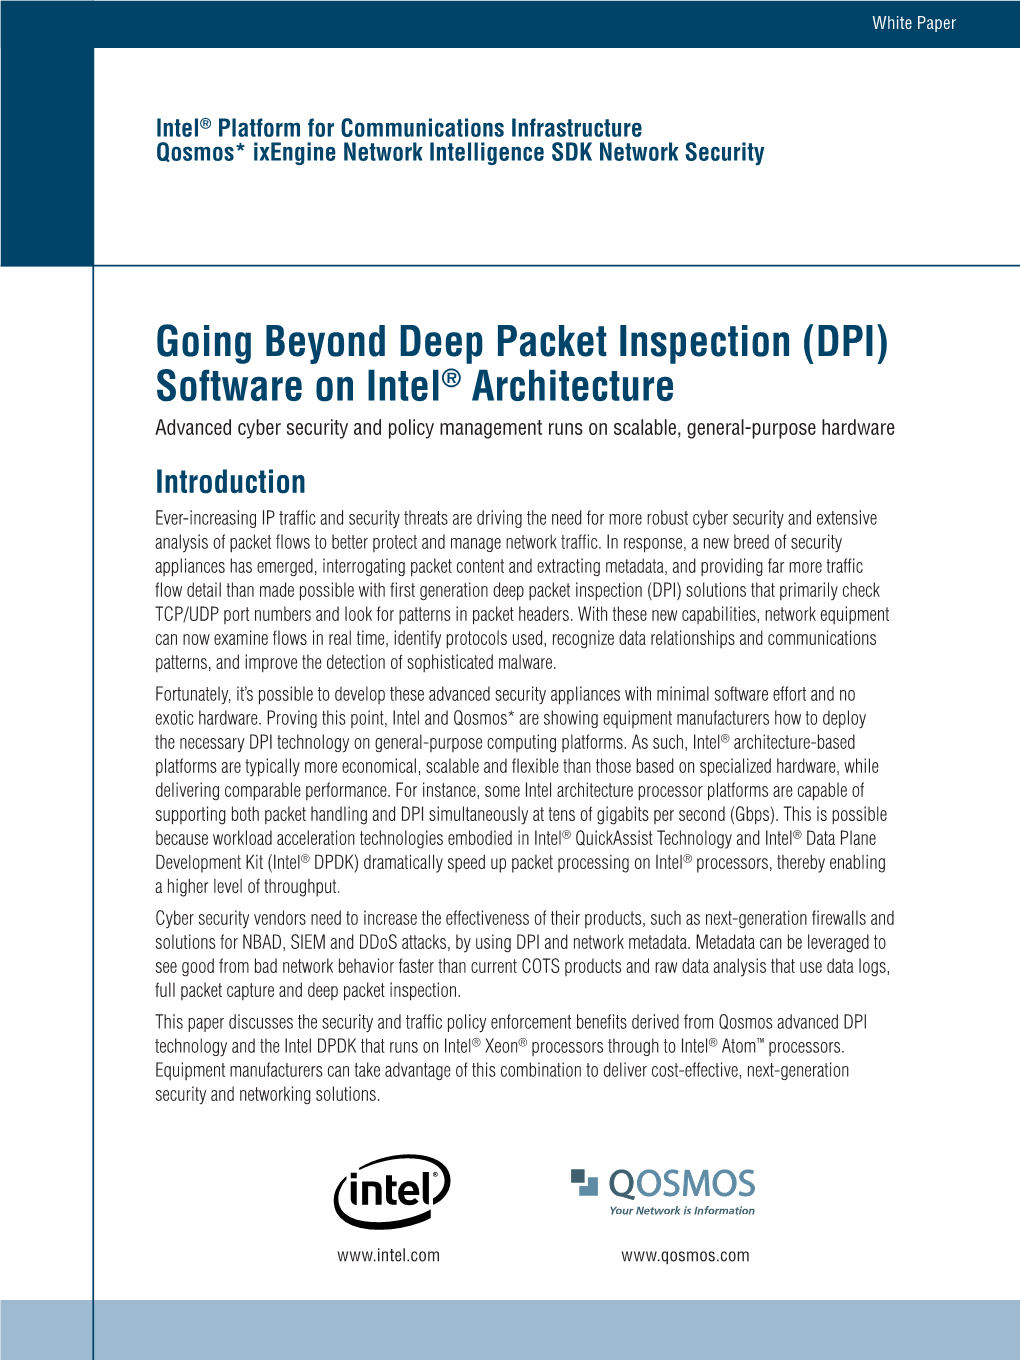 Going Beyond Deep Packet Inspection (DPI) Software on Intel